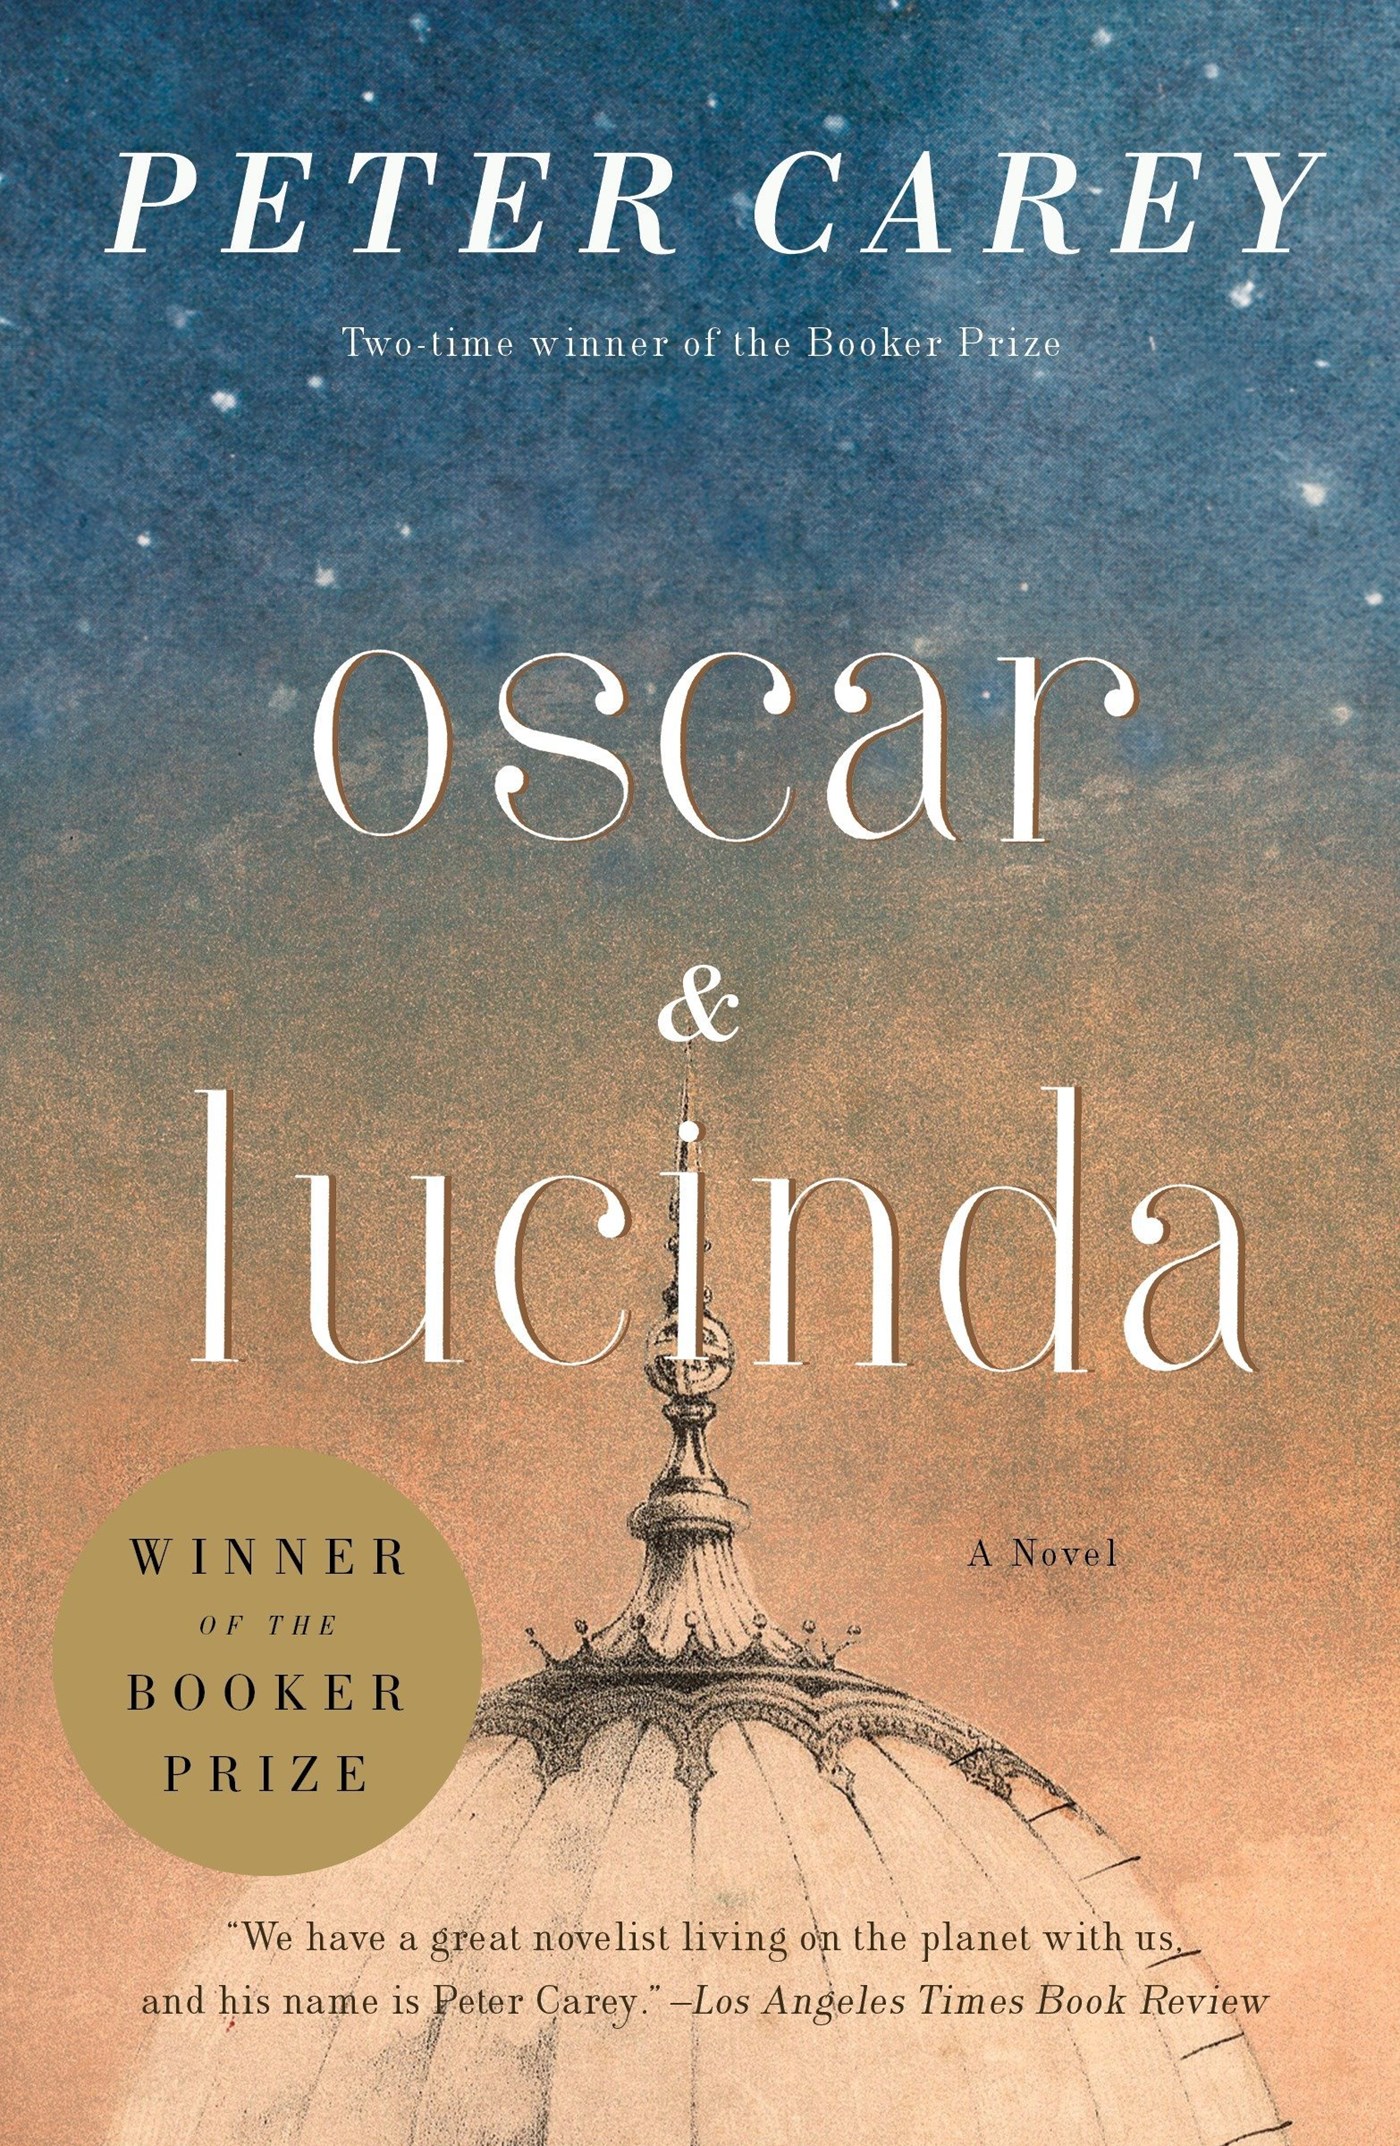 Oscar & Lucinda by Peter Carey